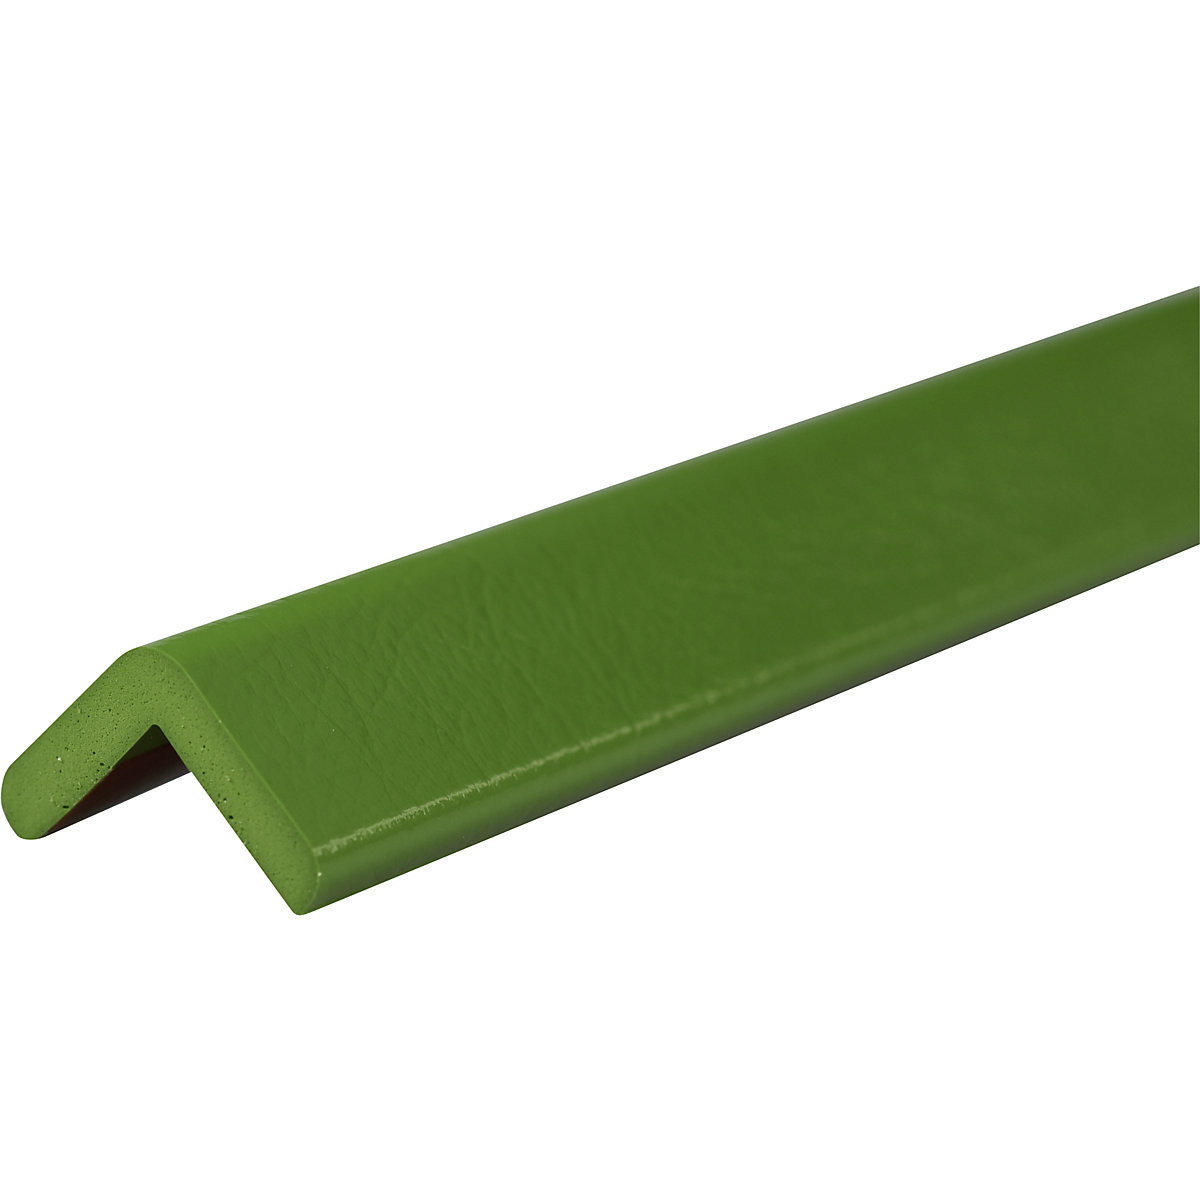 Knuffi®-hoekbescherming – SHG, type H, stuk van 1 m, groen-13